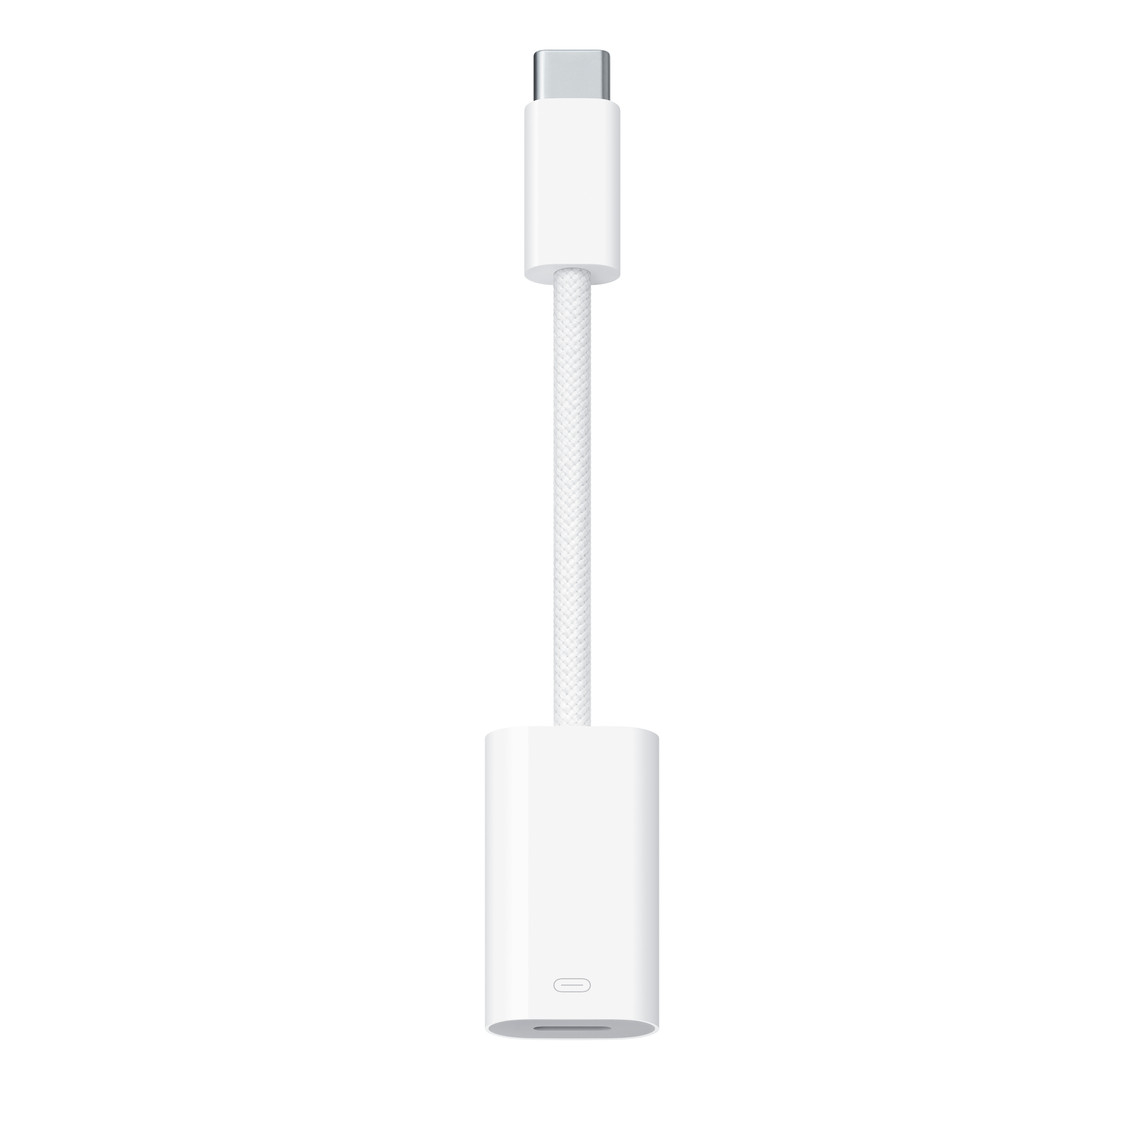 Адаптер Apple USB-C to Lightning MUQX3FE/A блок питания сетевой адаптер 12w для ipad iphone